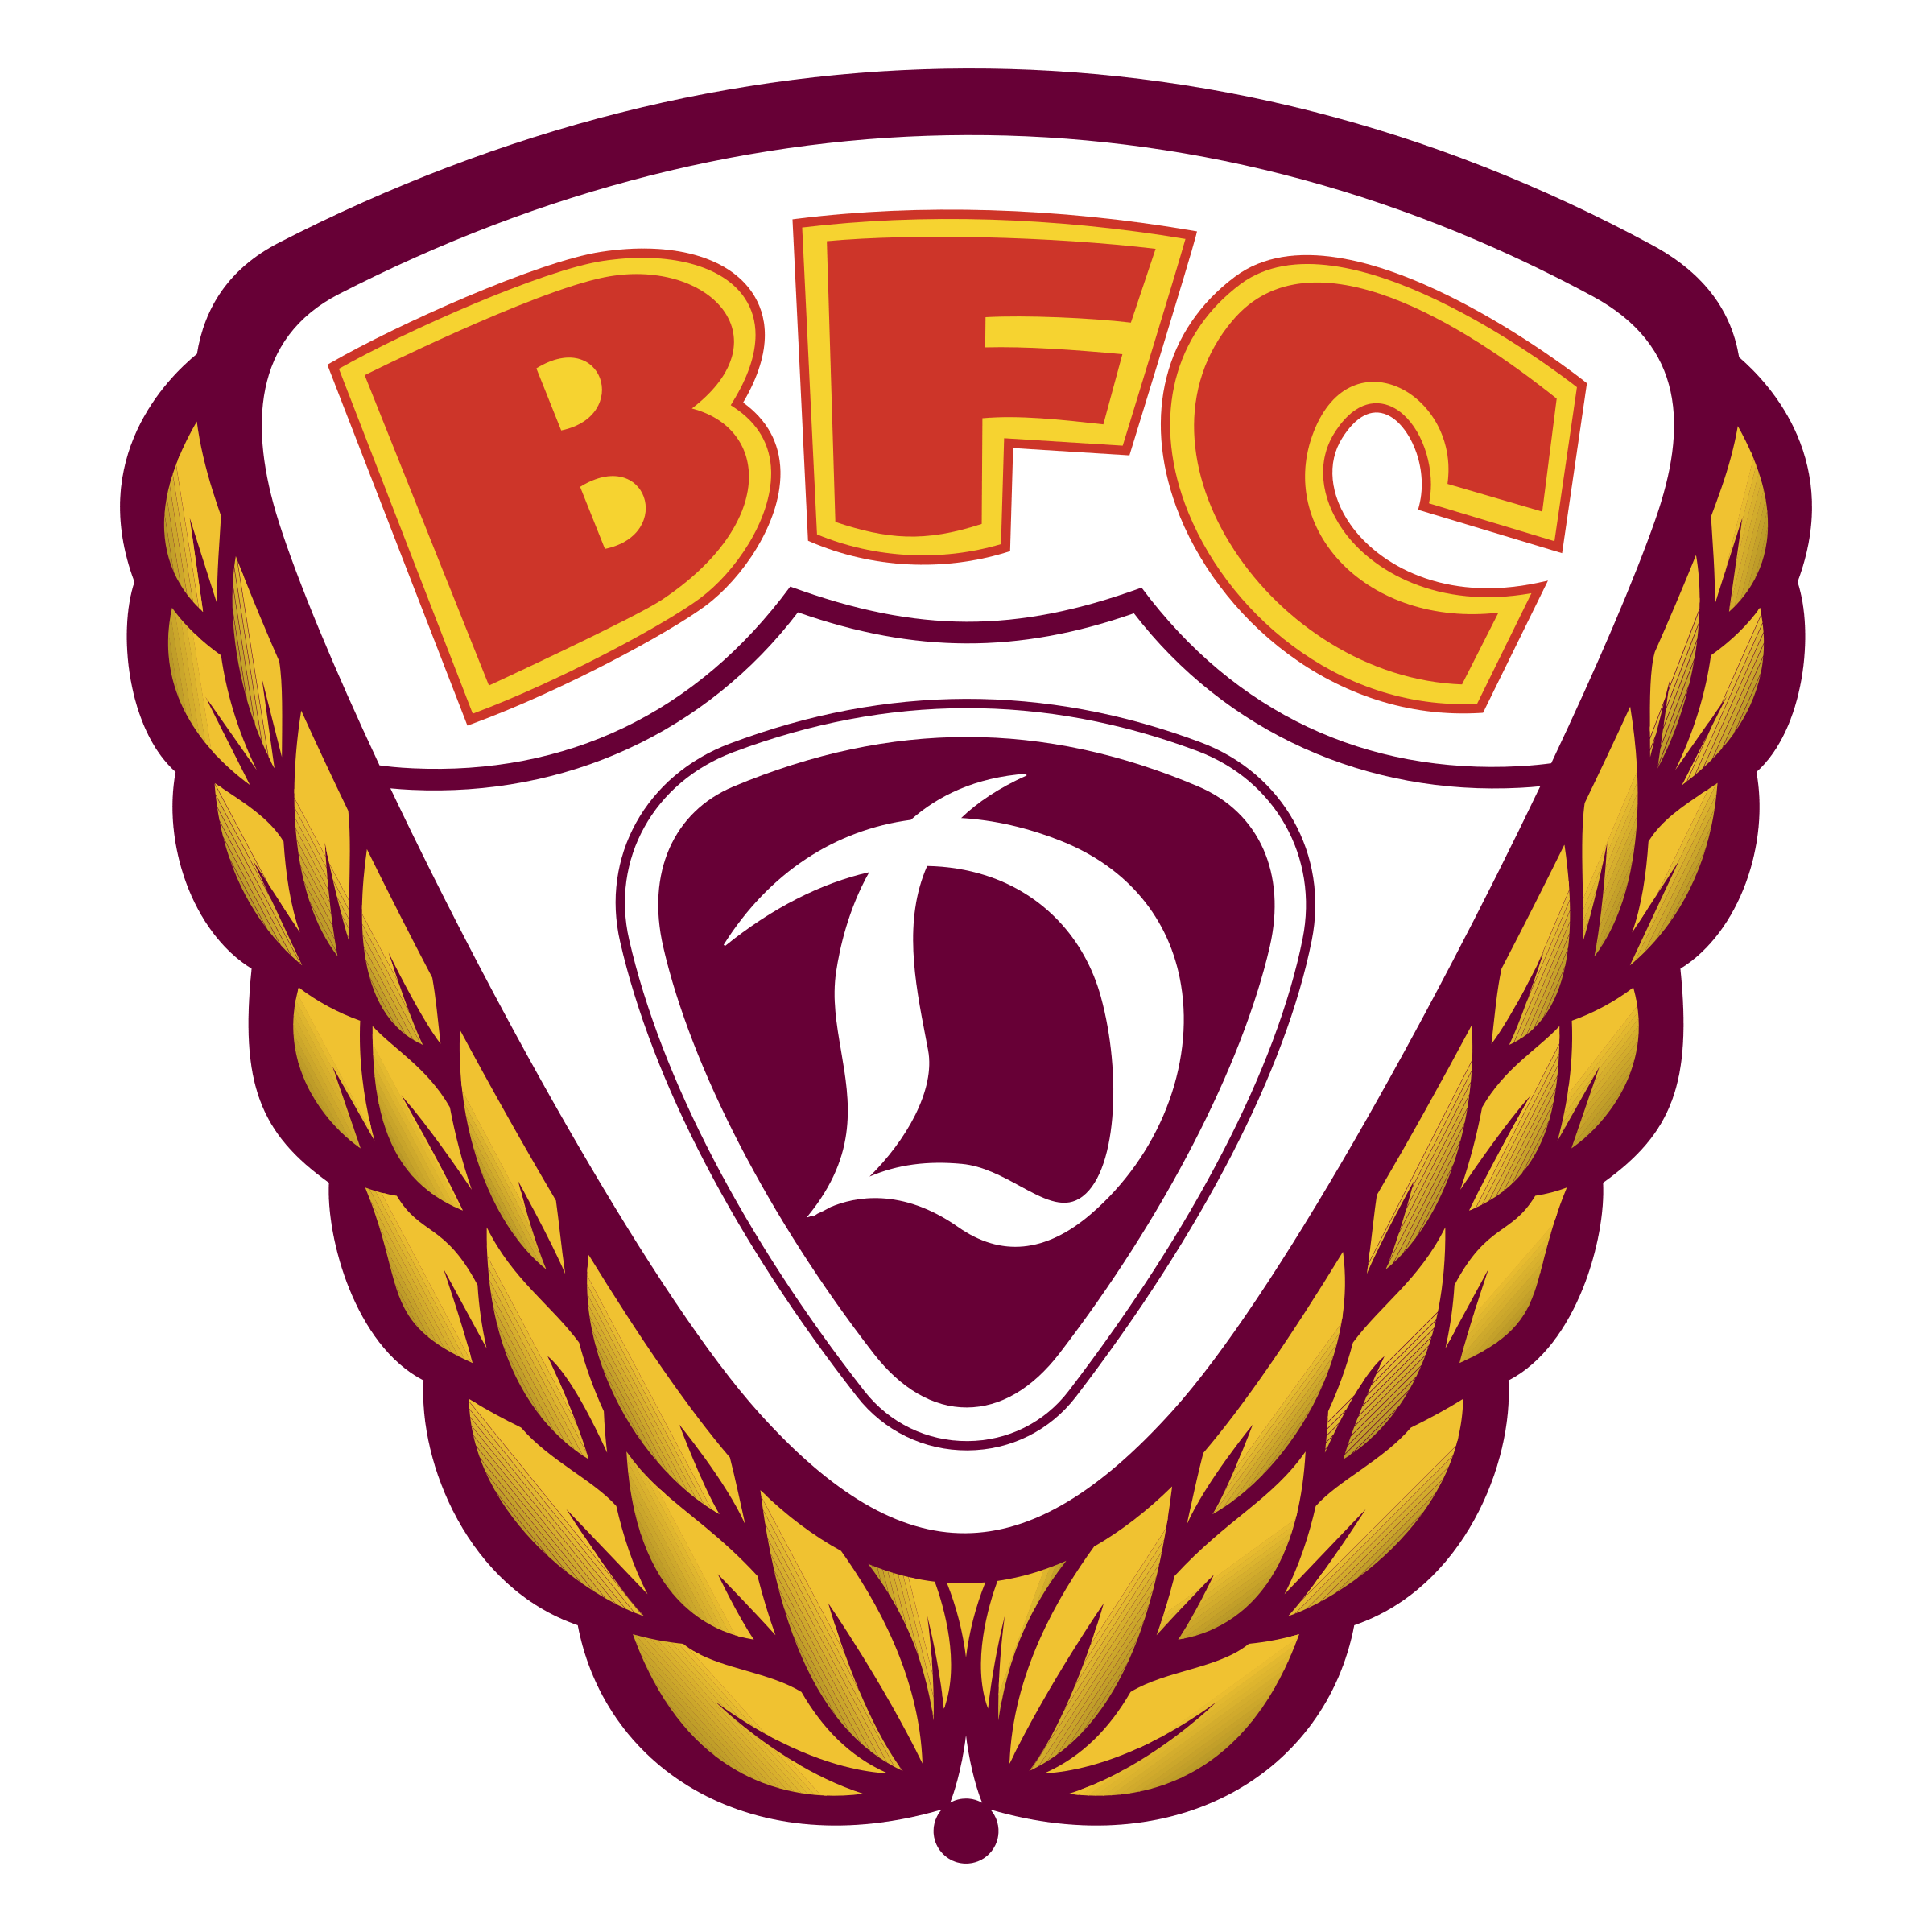 BFC Logo - BFC Dynamo Berlin Logo PNG Transparent & SVG Vector - Freebie Supply